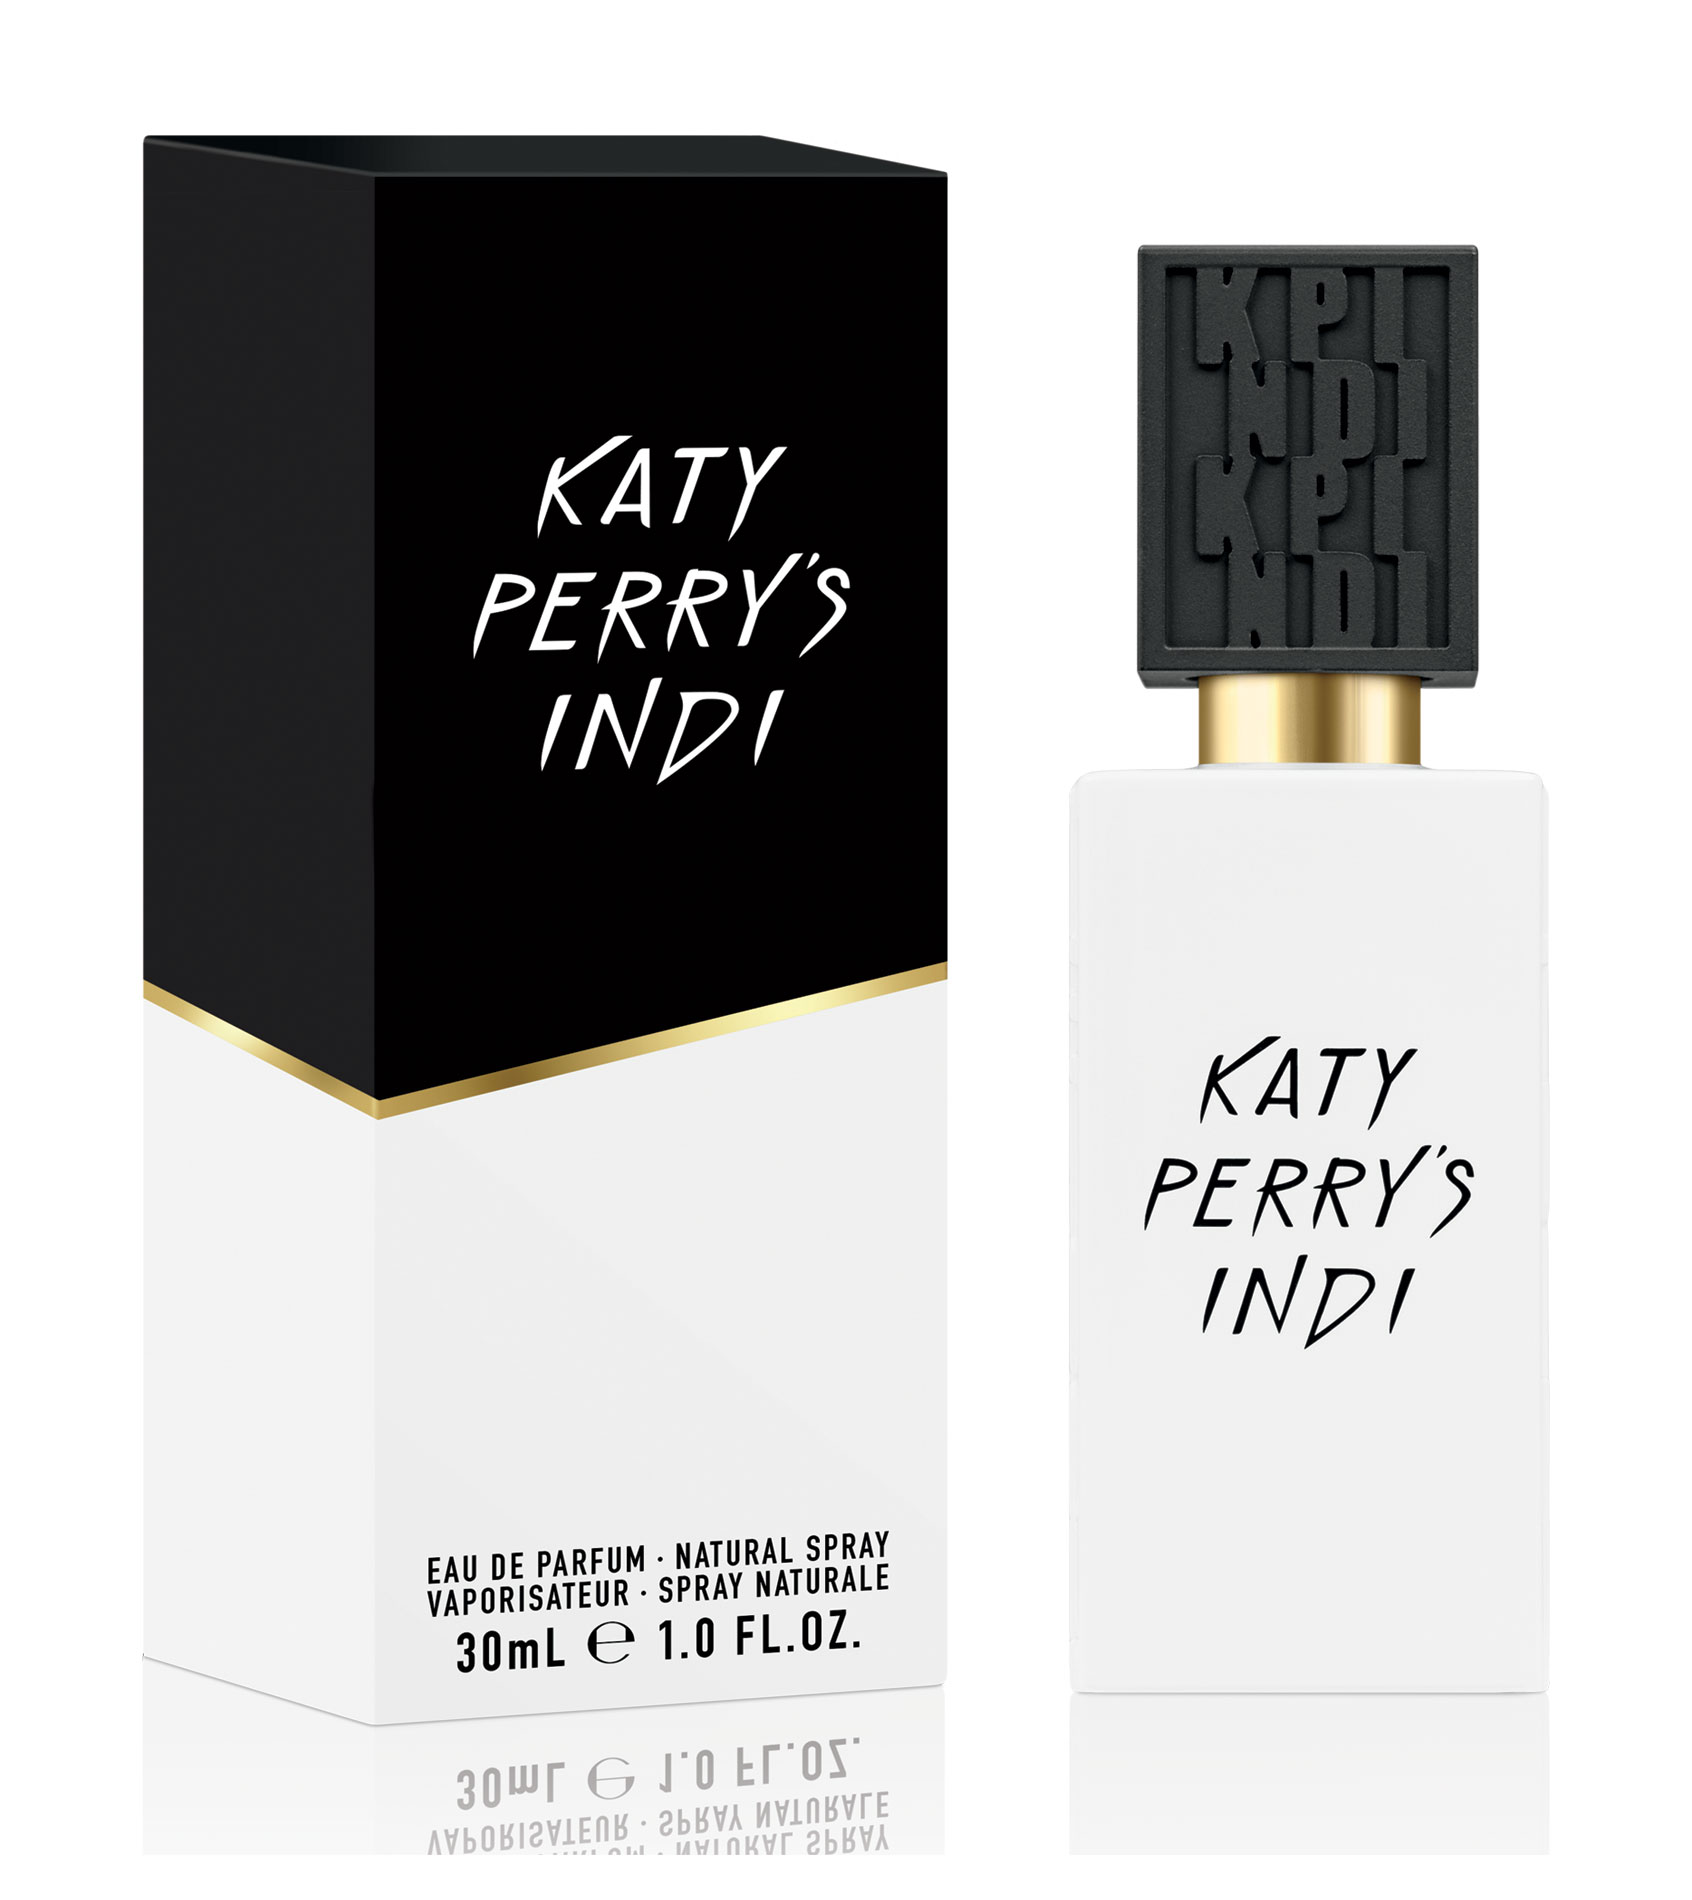 Katy Perry's new perfume celebrates individuality 